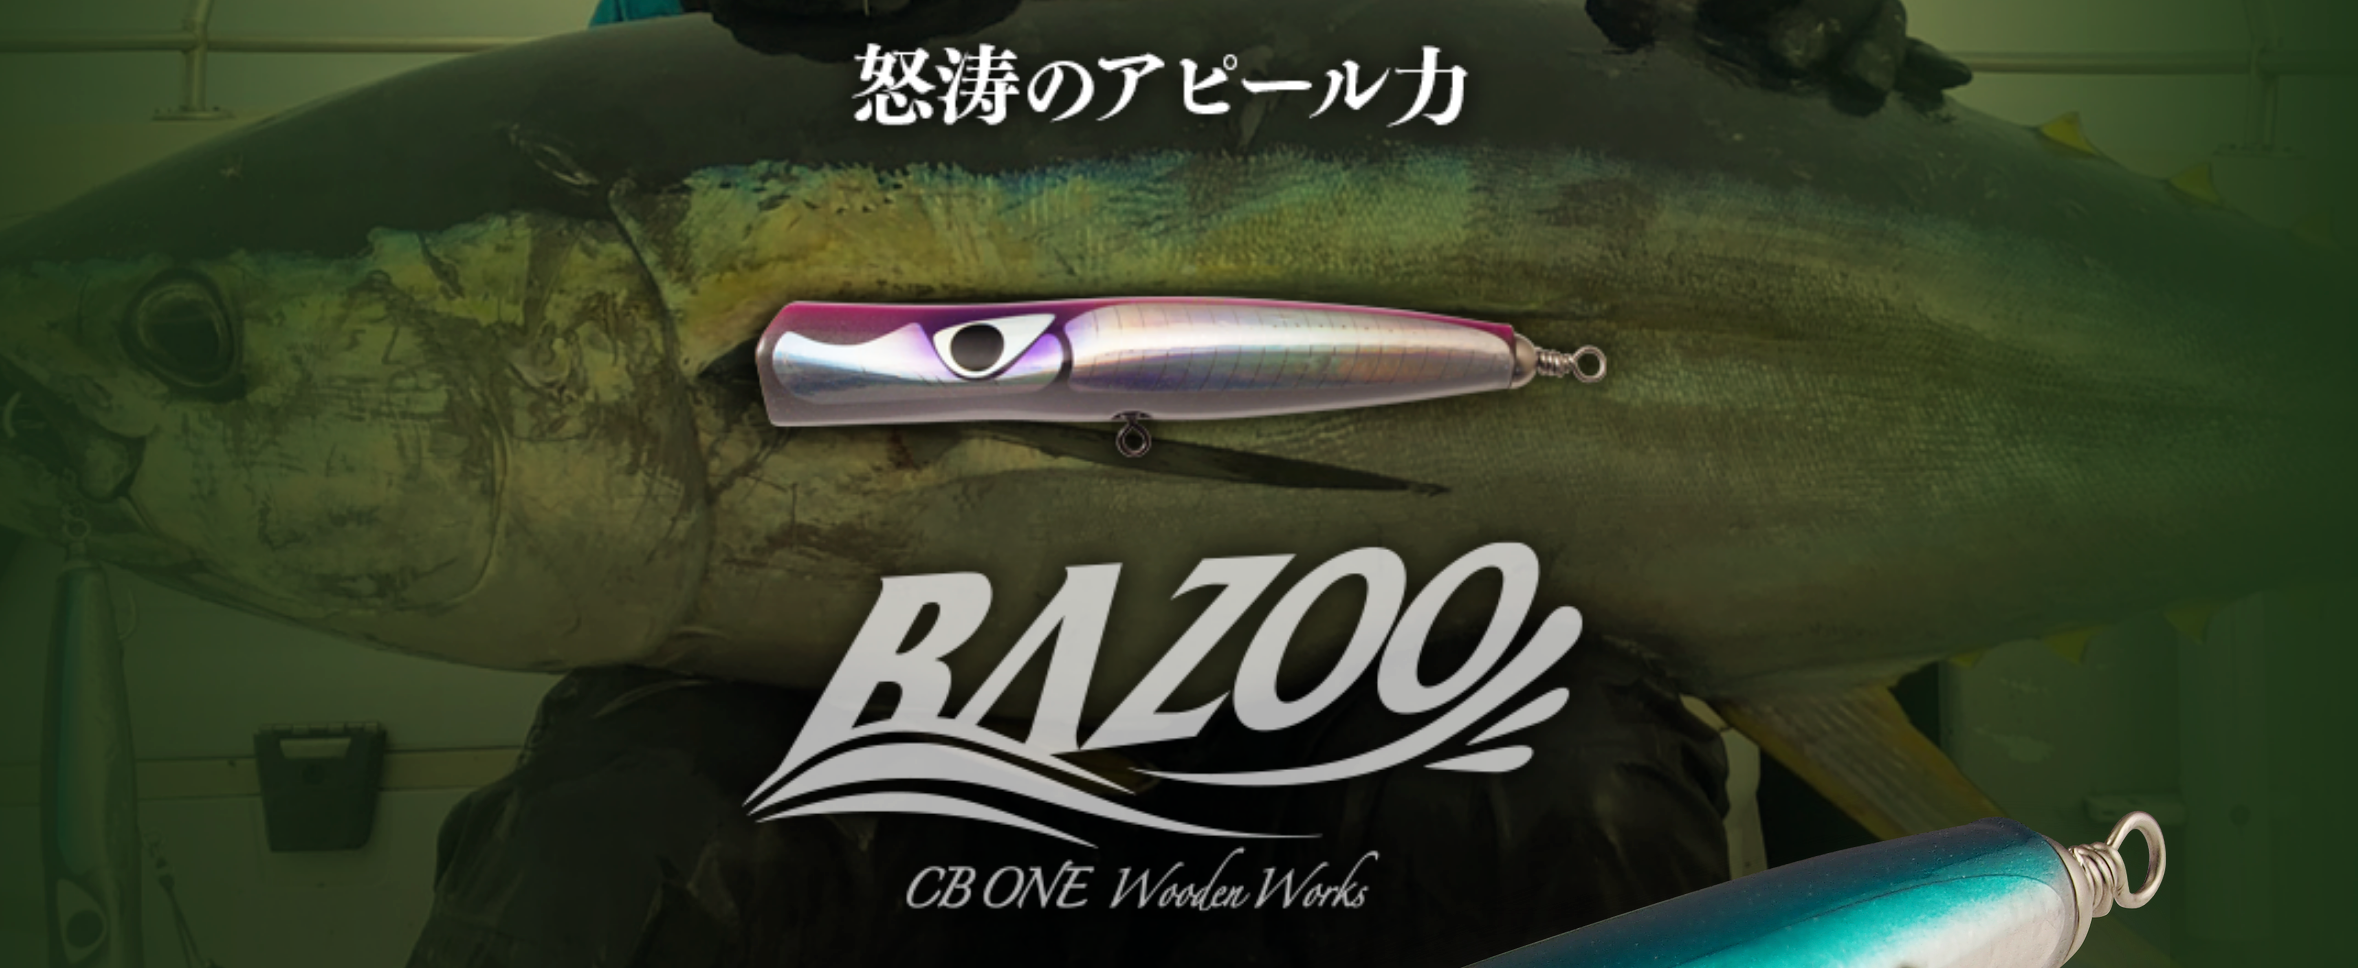 CB-ONE BAZOO 200 イカカラー | nate-hospital.com